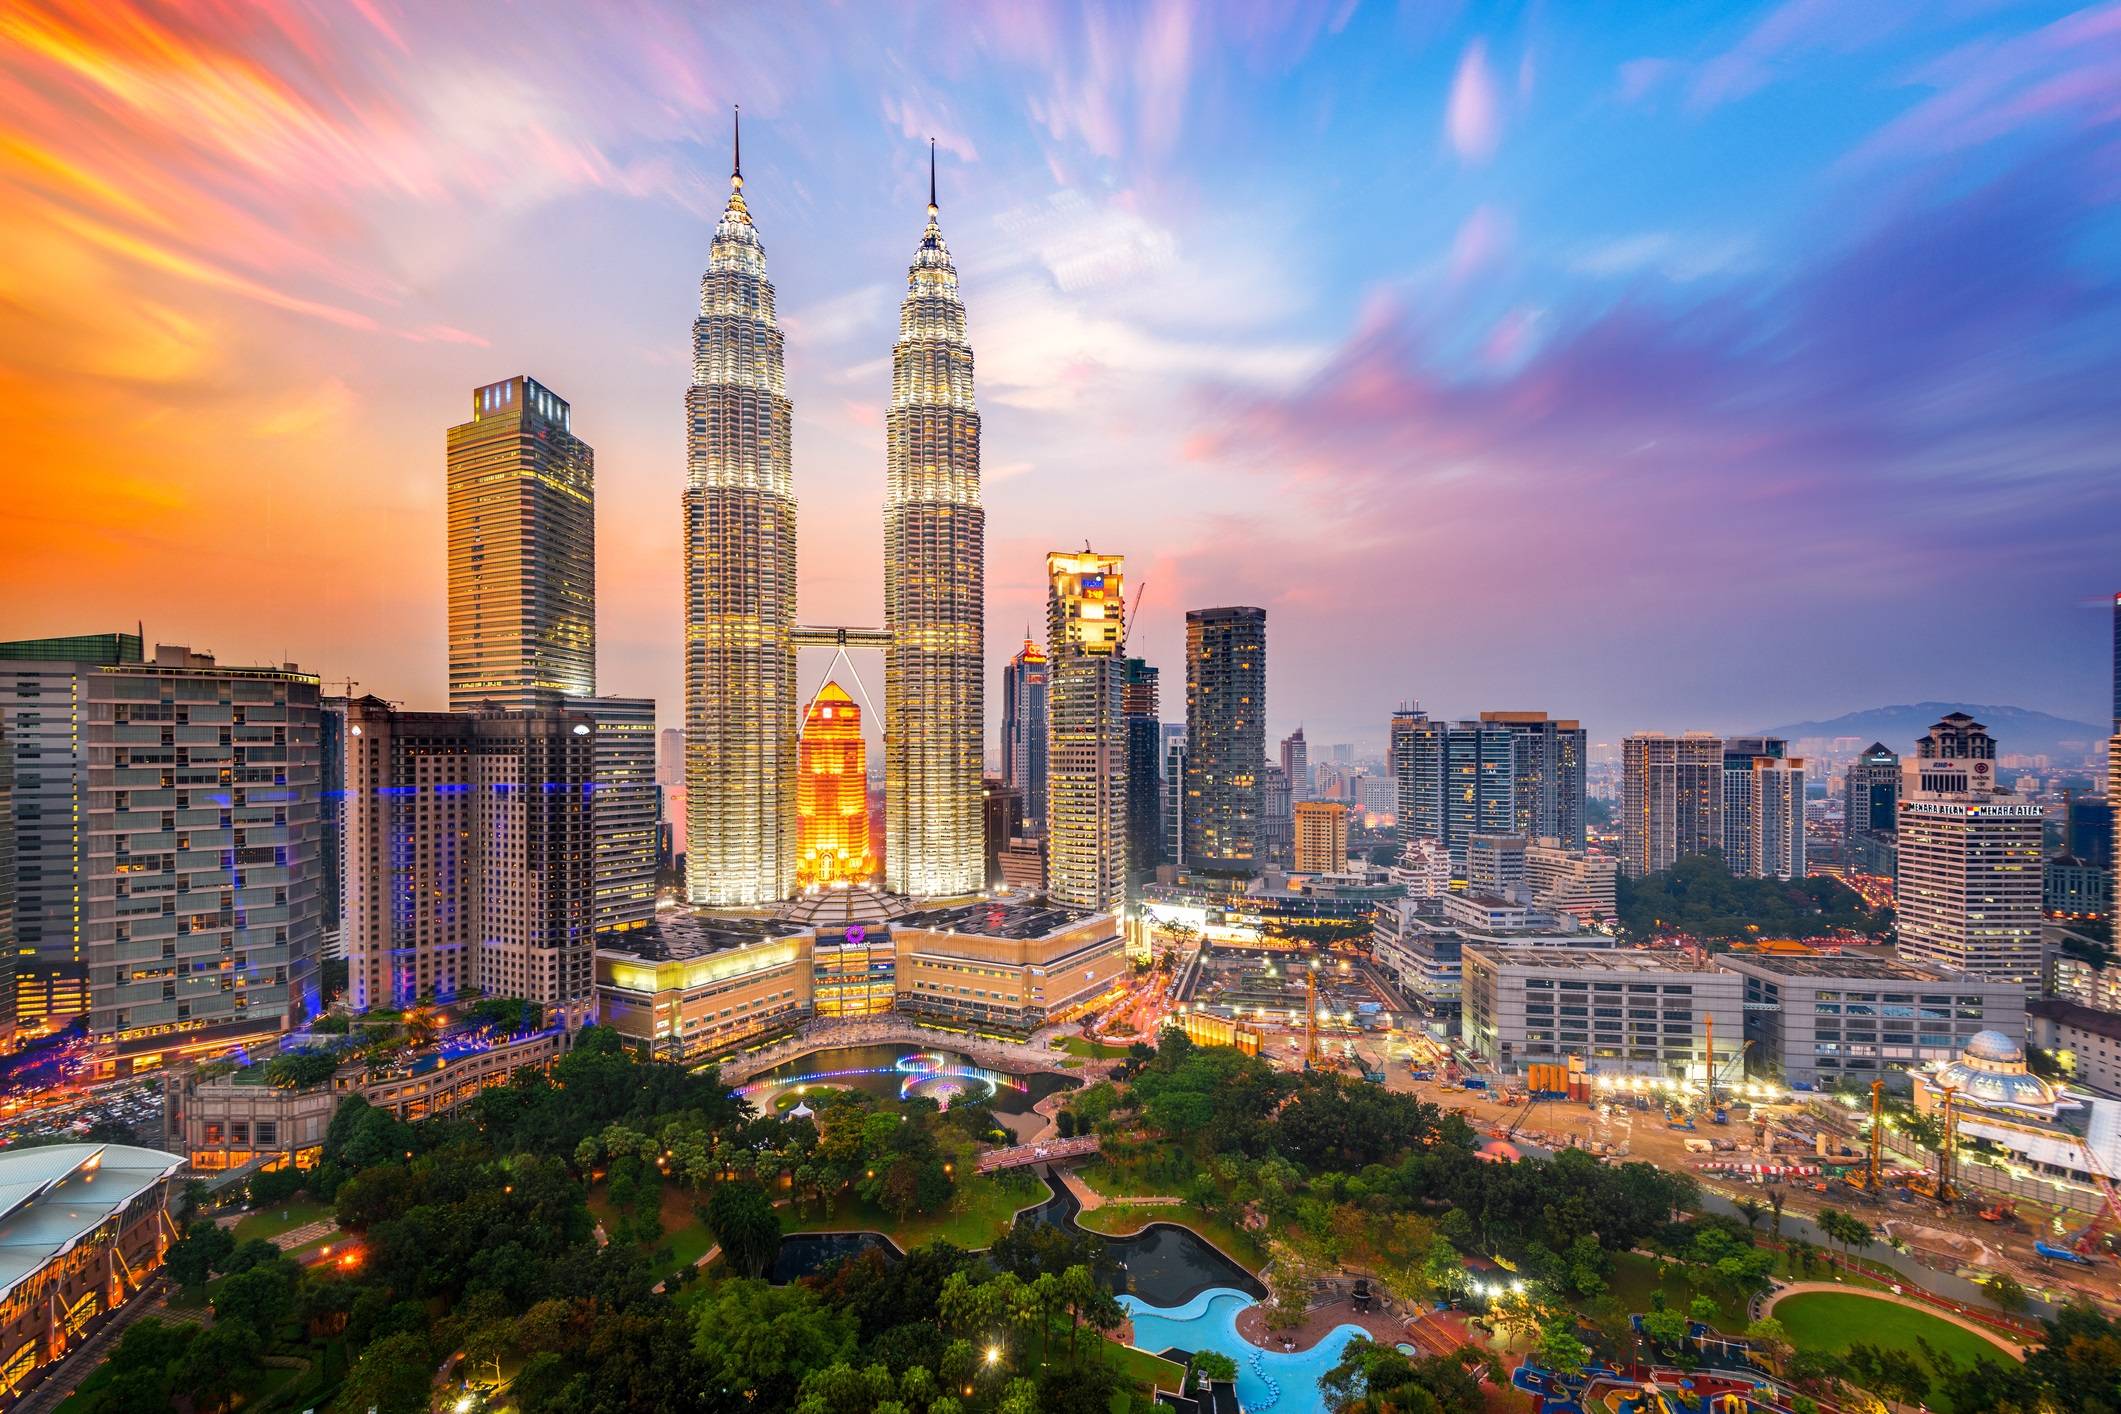 Kuala Lumpur - skyline